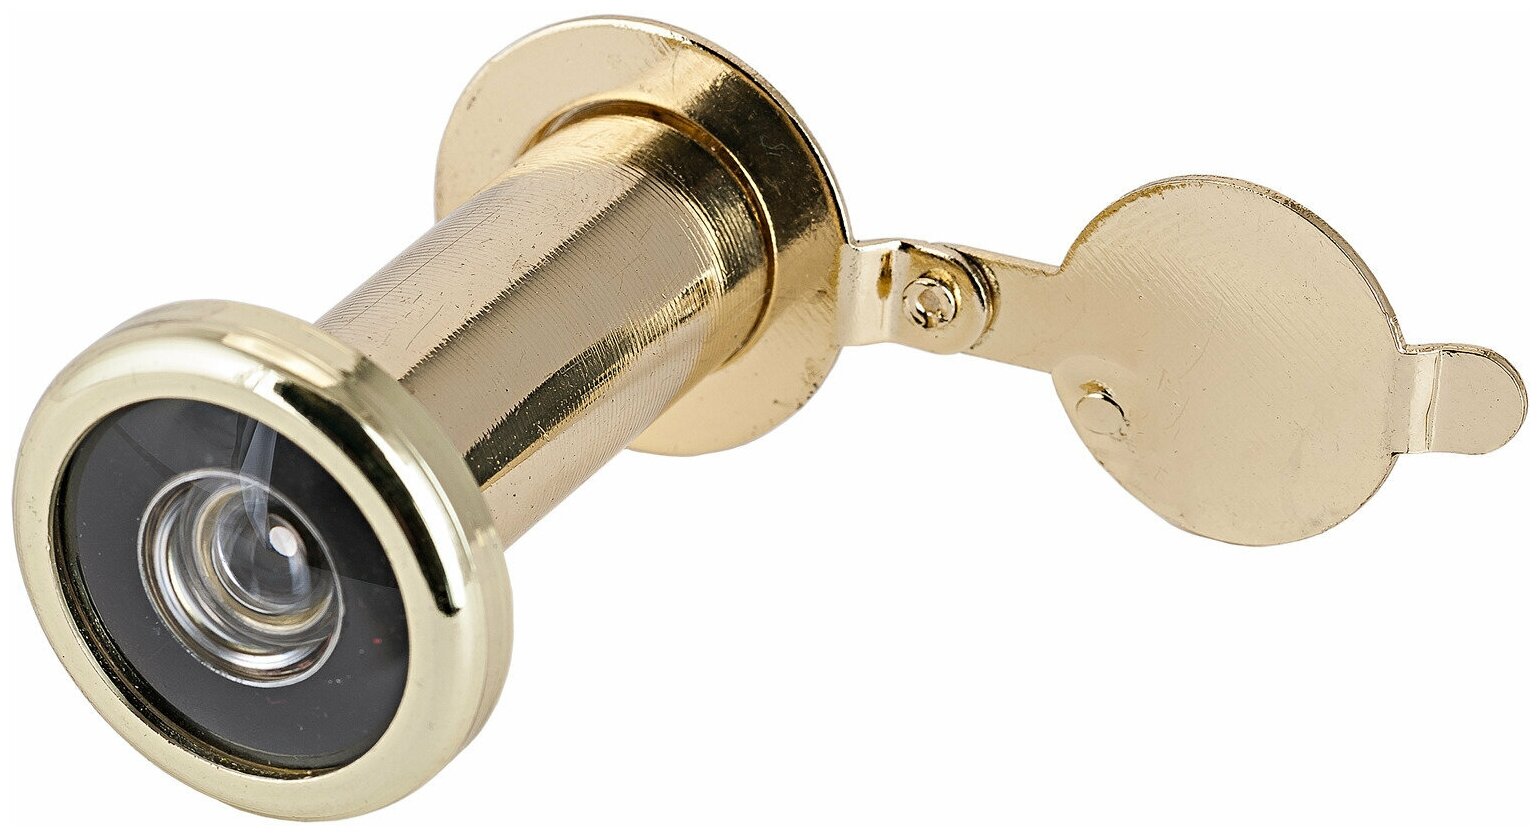 Глазок дверной для дверей 35-50 мм аллюр ГД-2 БШт диаметр 14 мм цвет золото